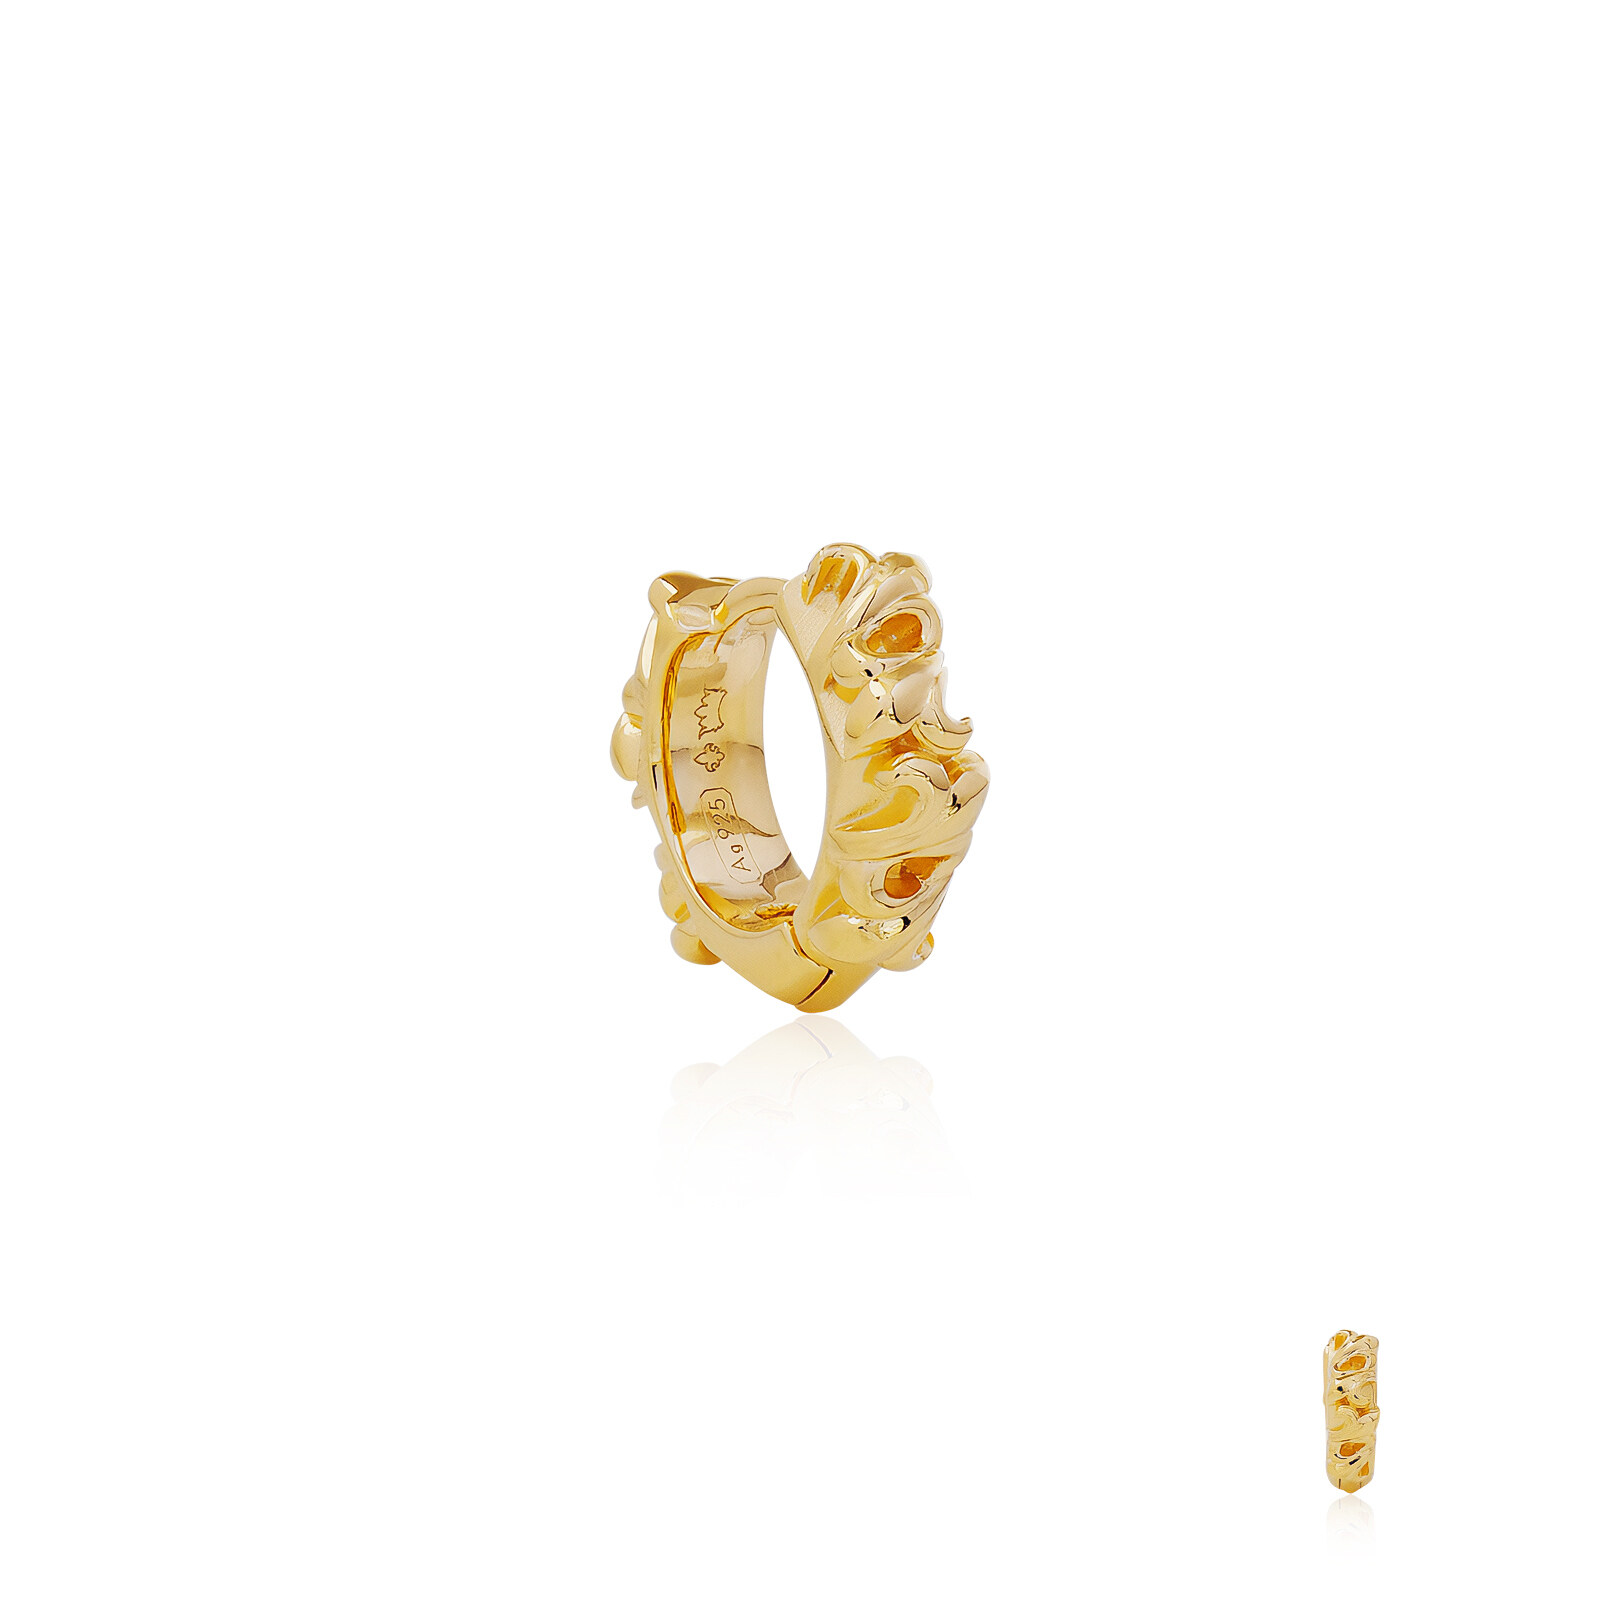 The Athena's Deadly Multi-Spikes Huggie - 24 Karat Gold -  ต่างหูเงินแท้ 925 แบบห่วงกริ๊กฮักกี้ ทำมือแกะลายเถาวัลย์สุดดุดัน  ขัดเงาชุบทองคำแท้ 24 กะรัต